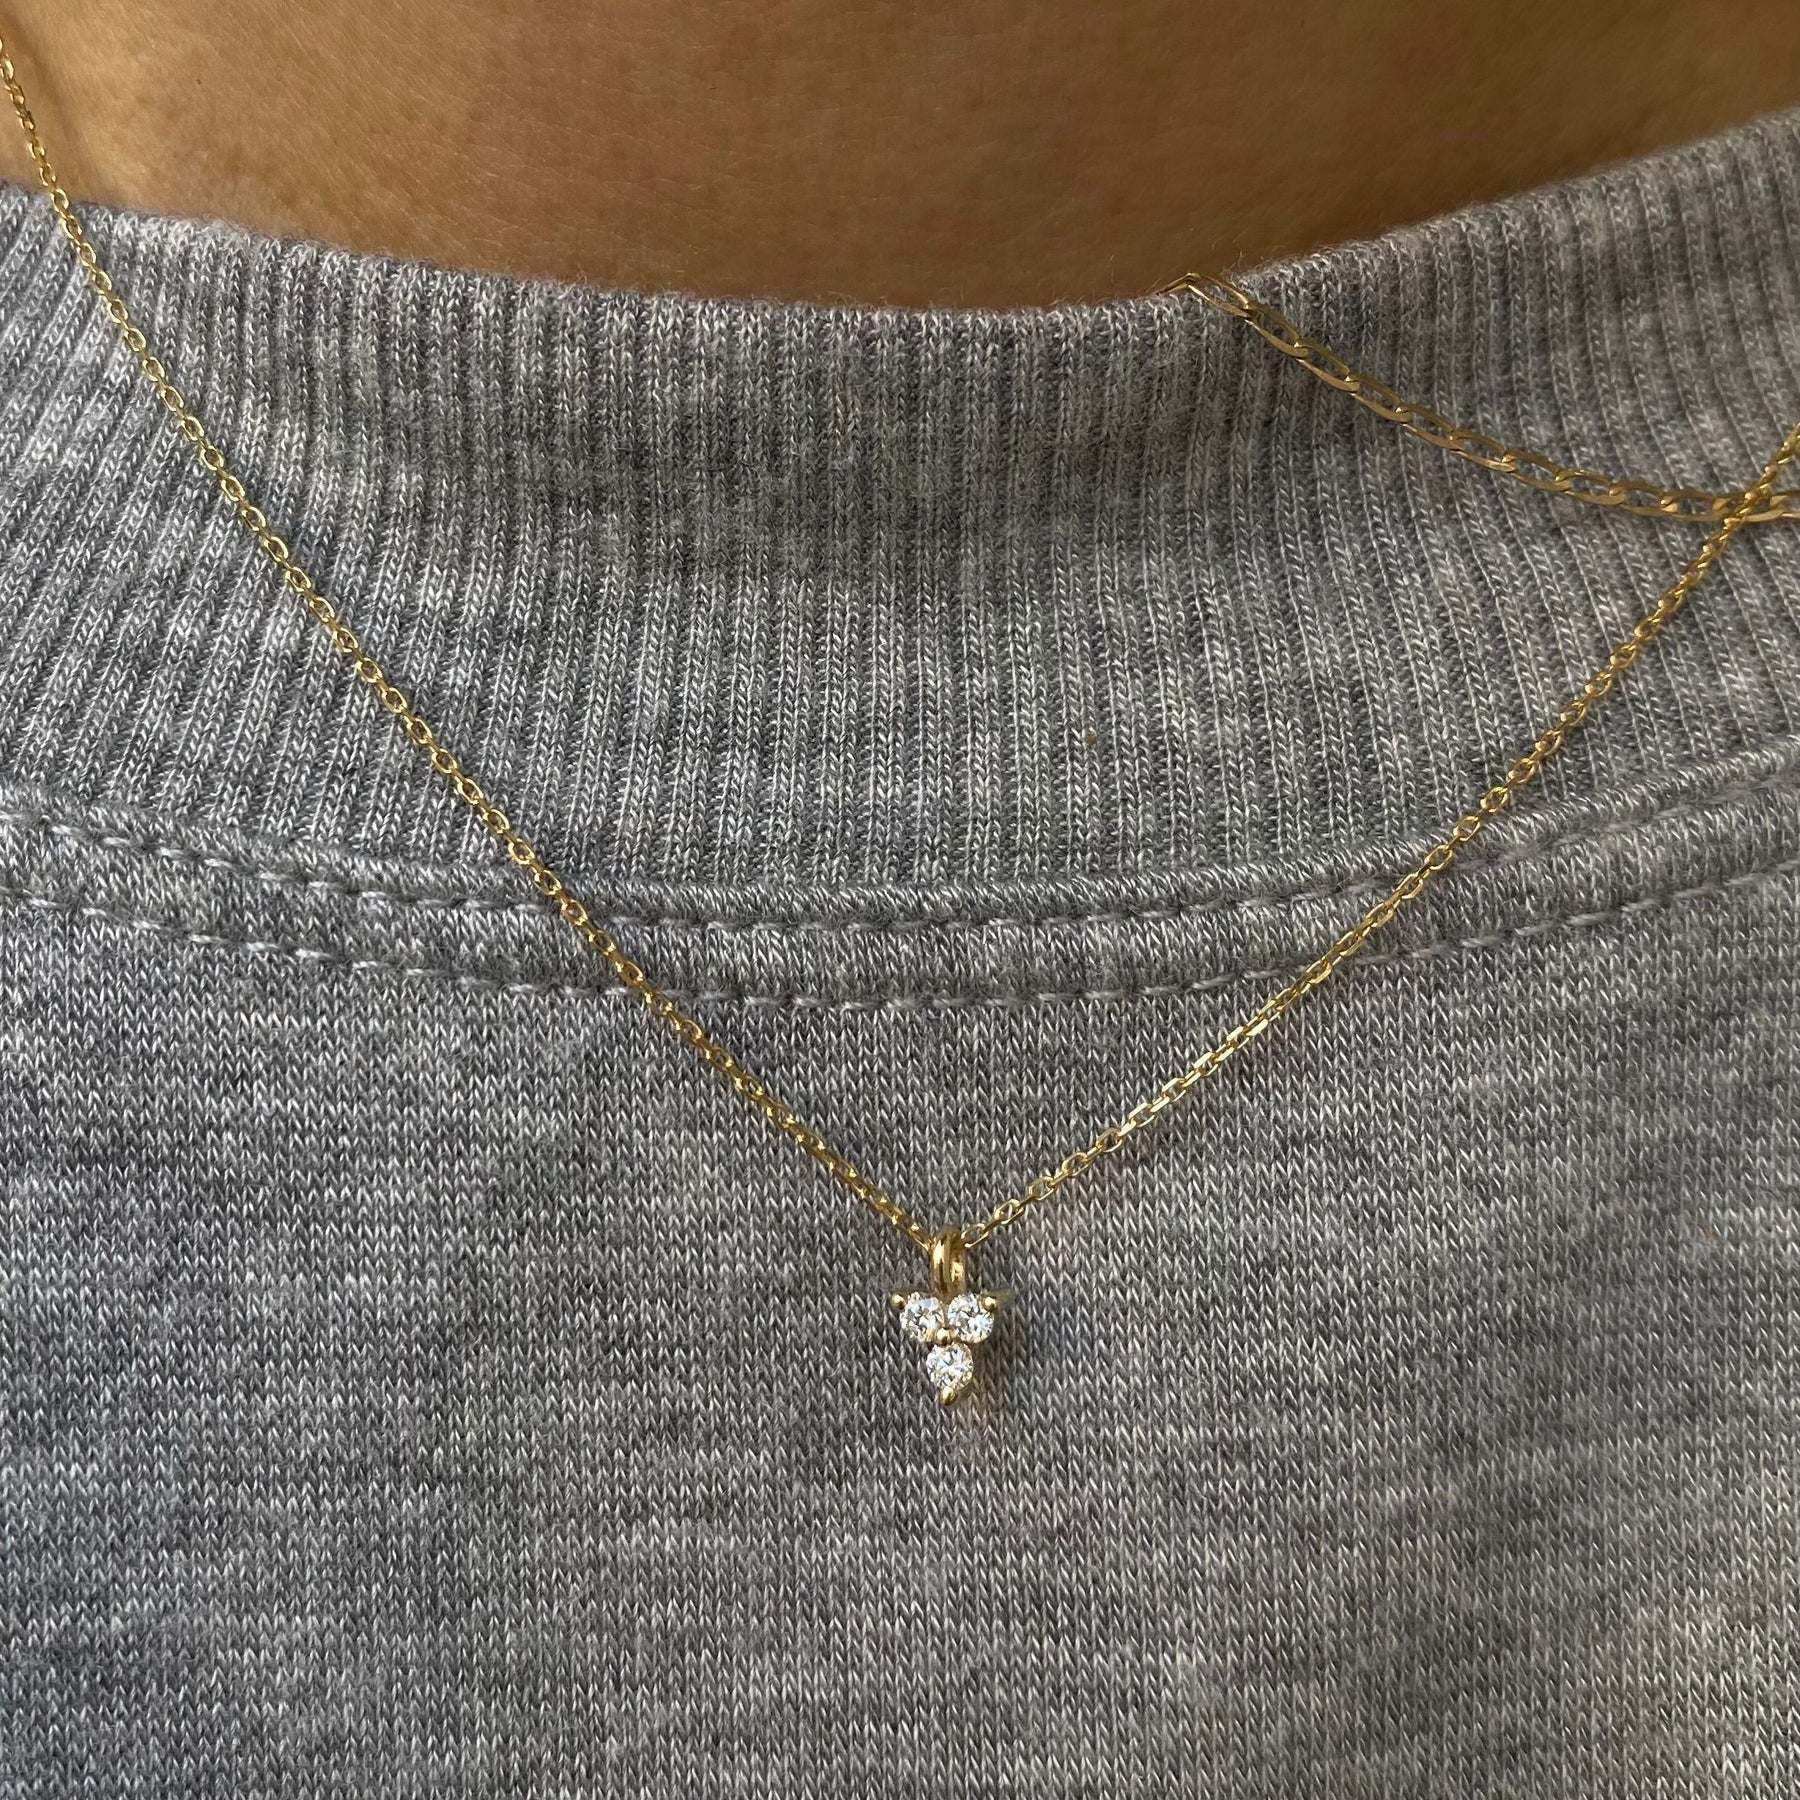 Diamond Triad Necklace